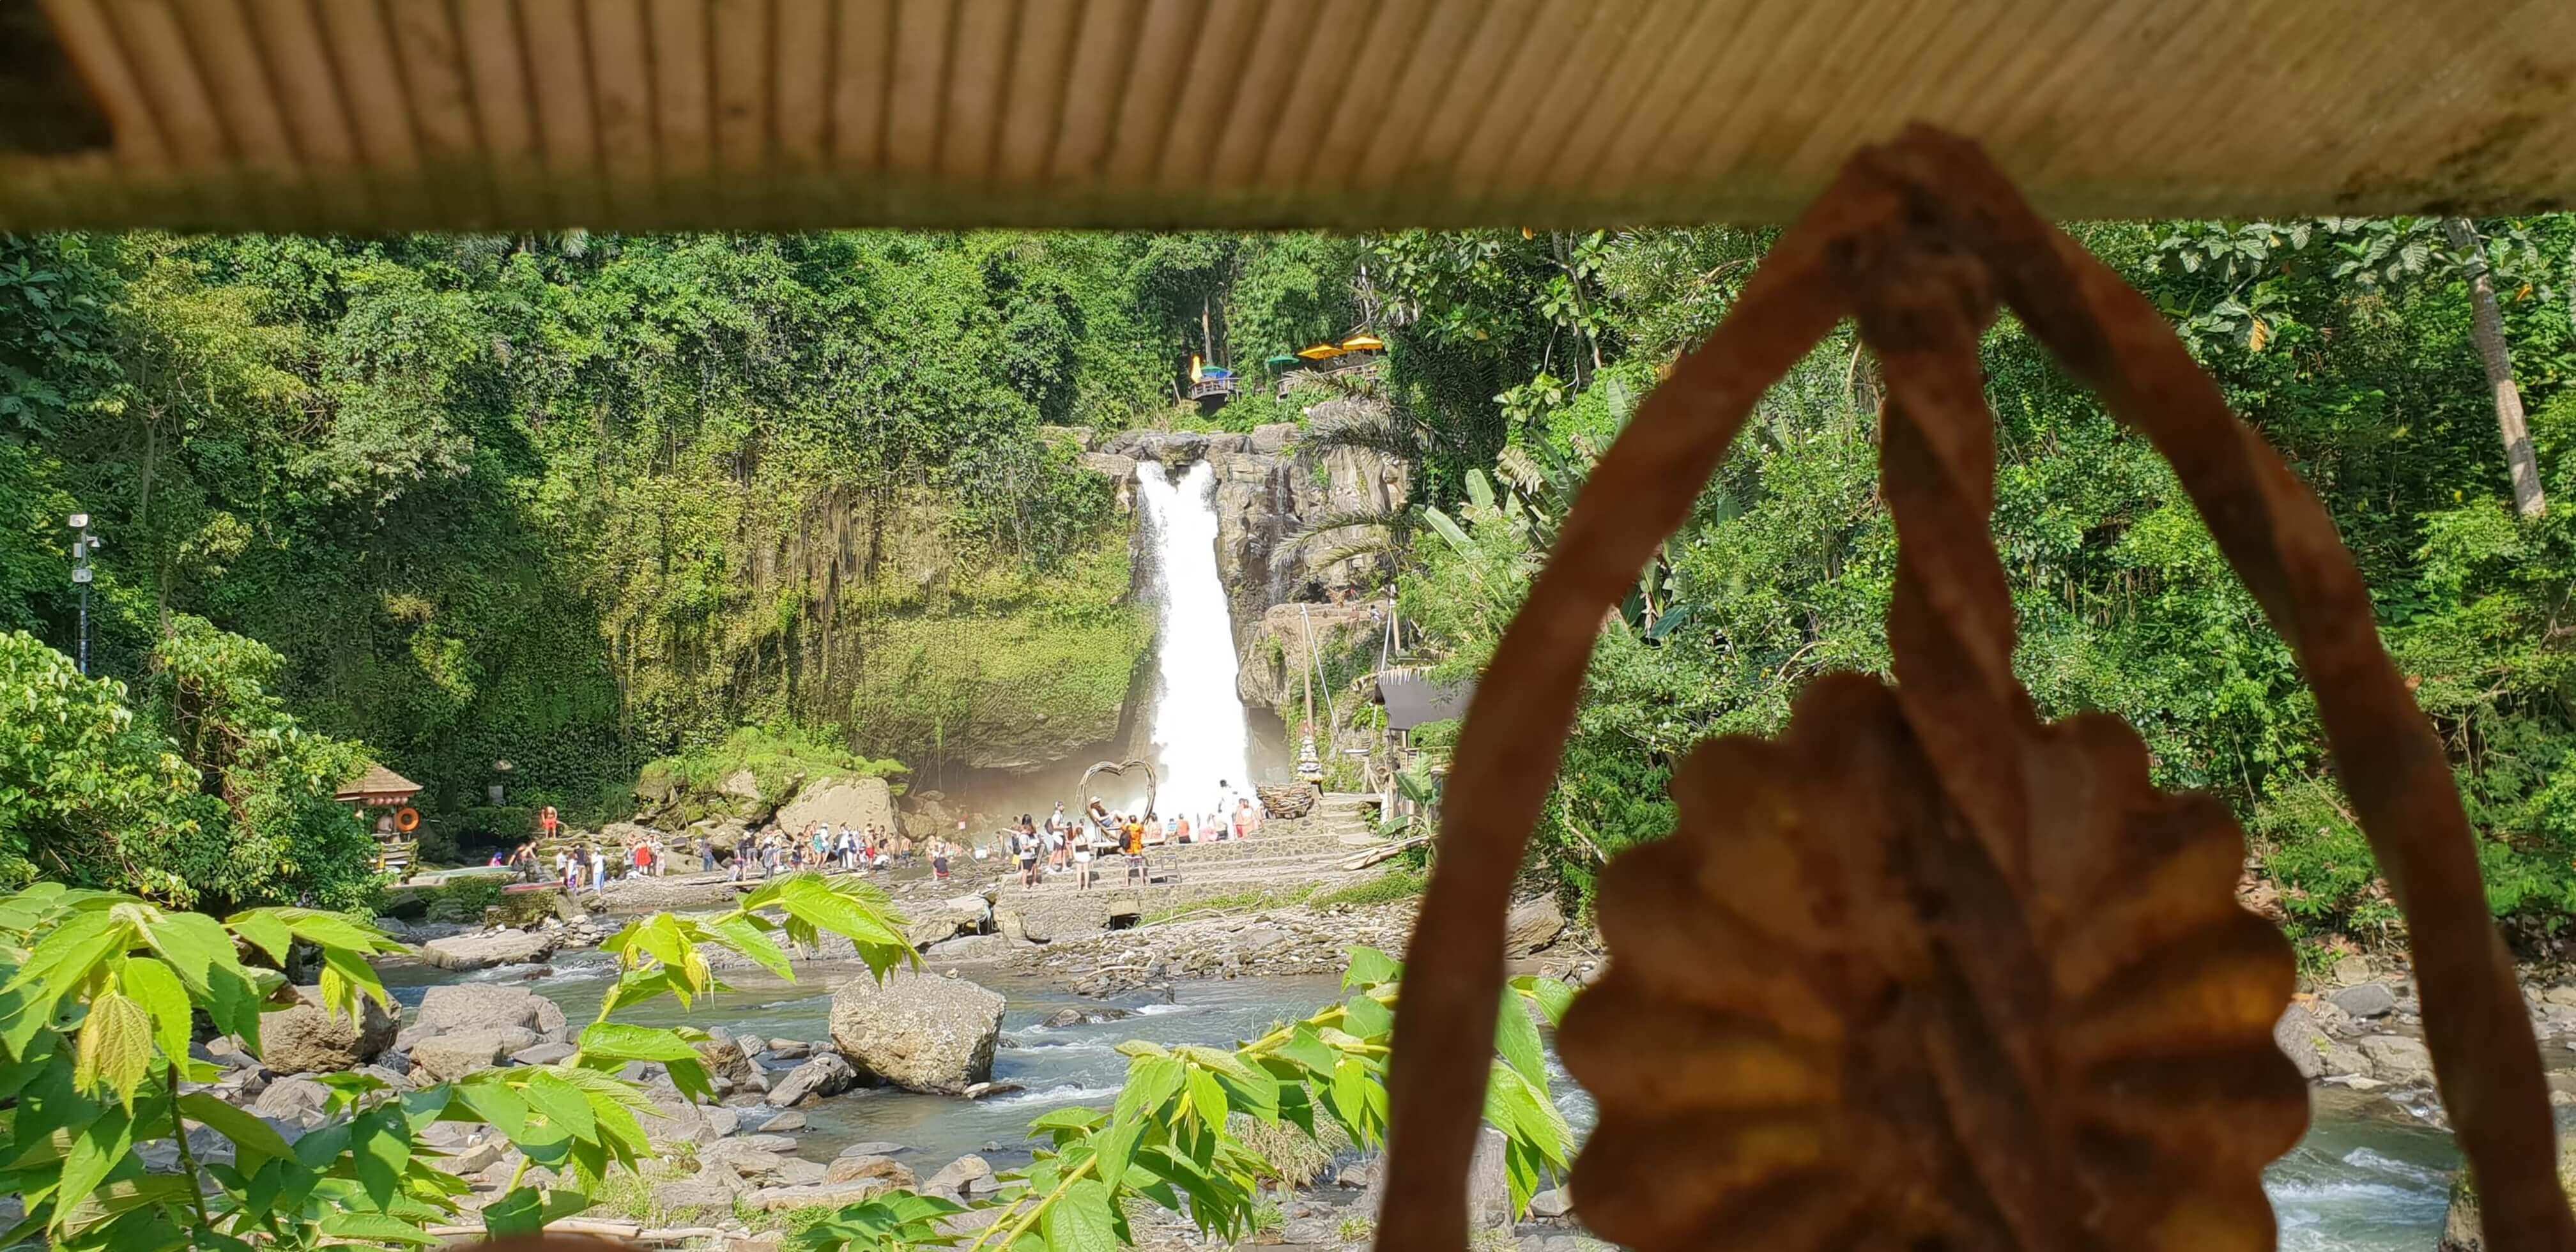 My bird's eye capture of the splendid Tegenungan Waterfall